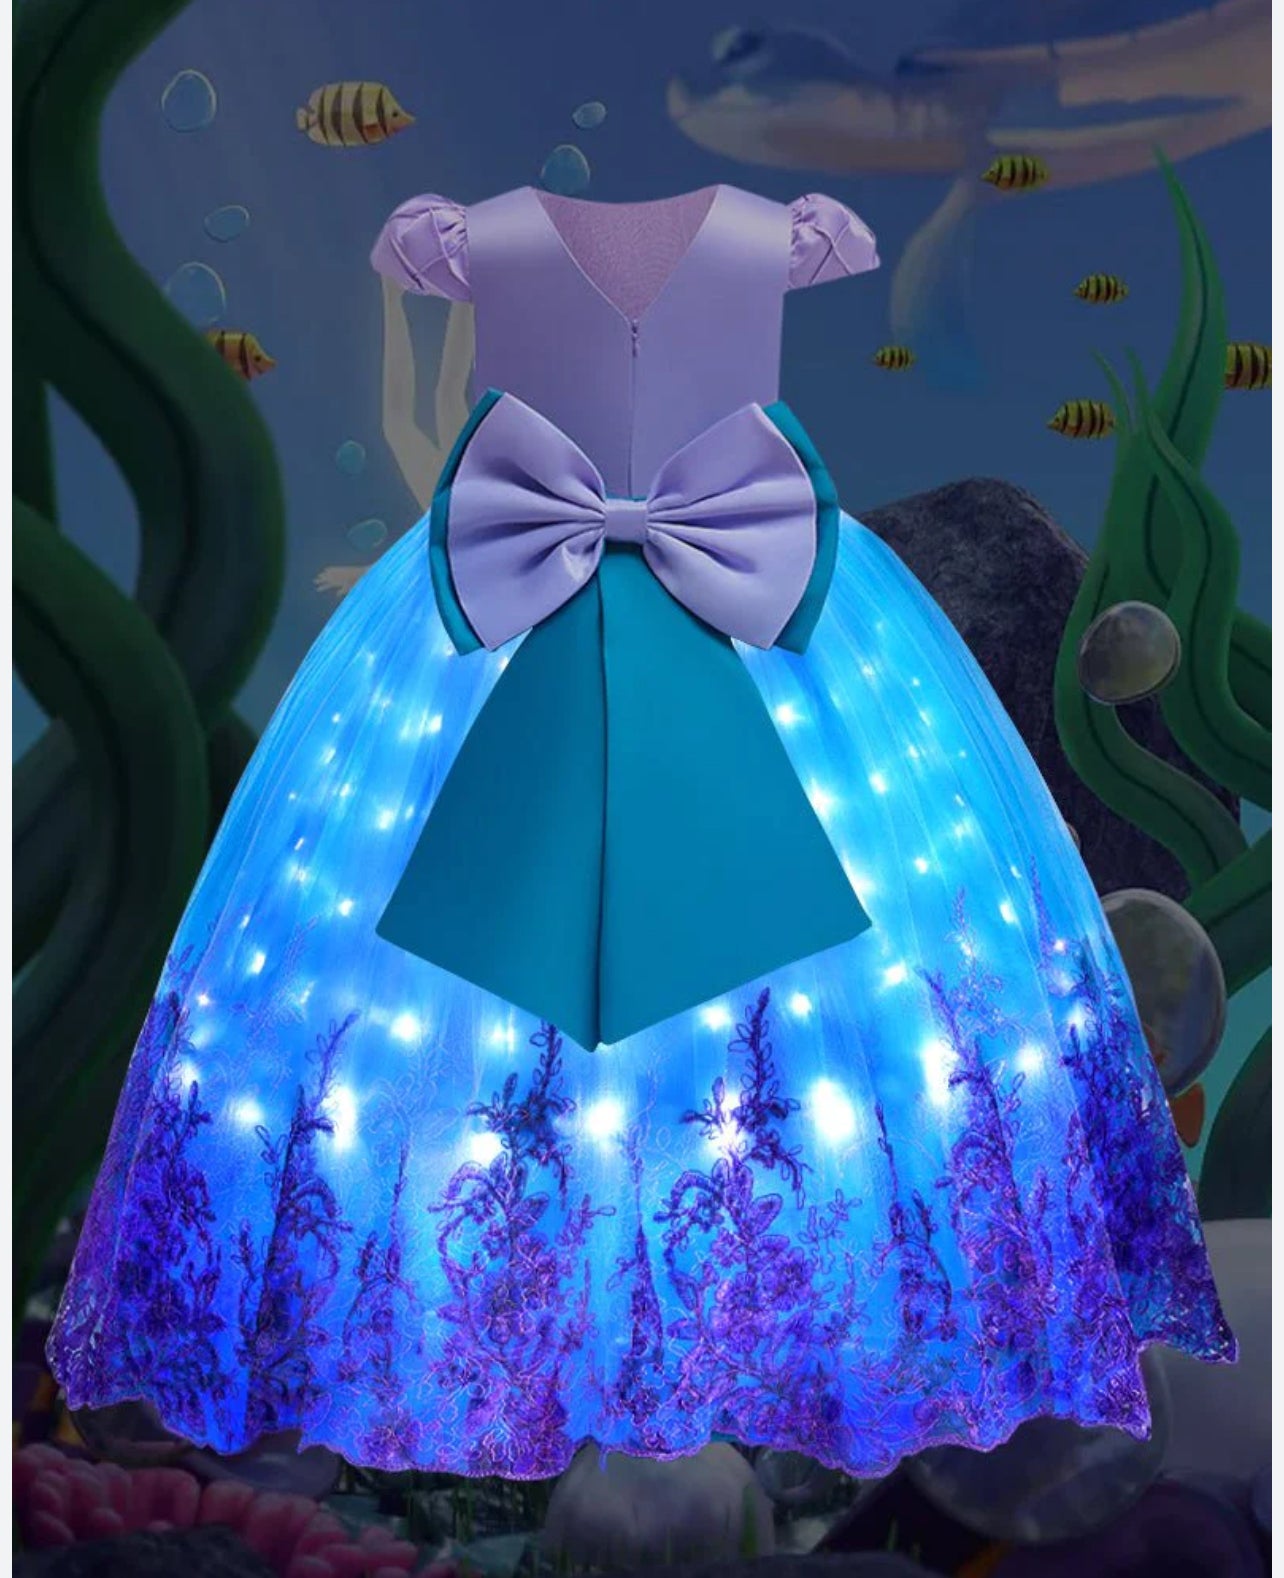 Glowing Little Mermaid 🧜‍♀️ Princess Tutu Dress ( Battery Not Included)